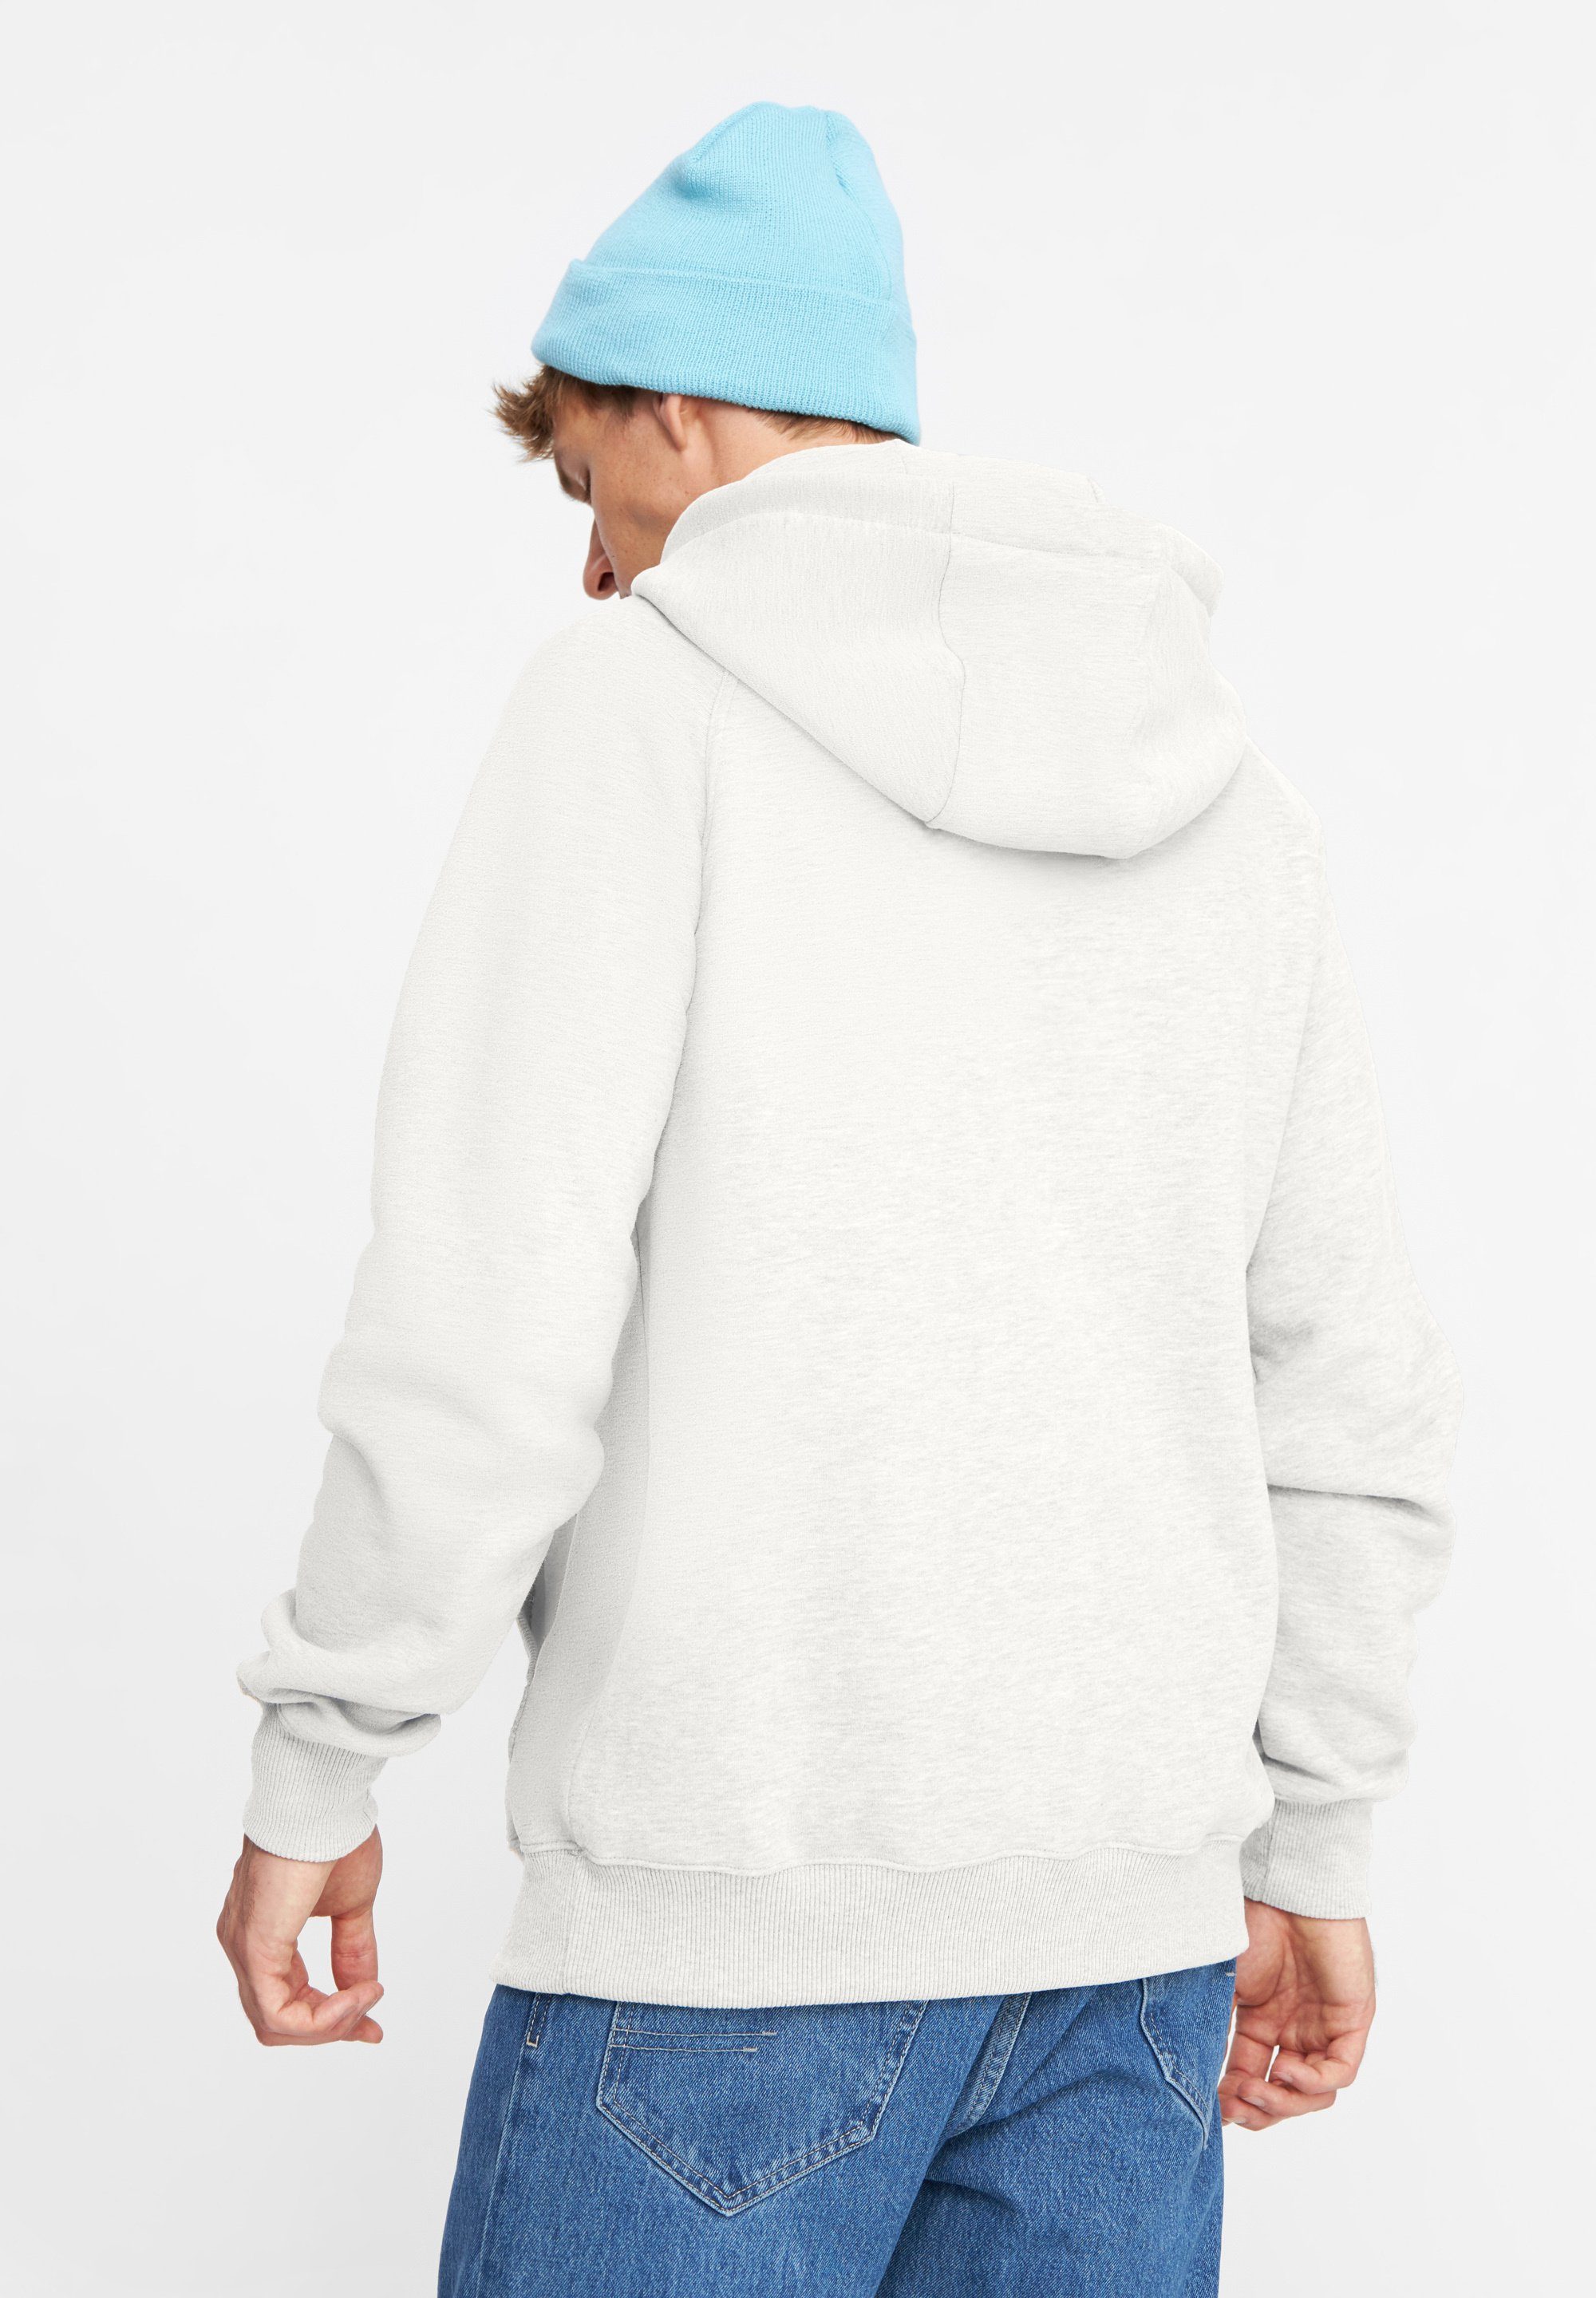 Derbe Sweatshirt Sturmmöwe Made in superweiches Material Portugal, off-white